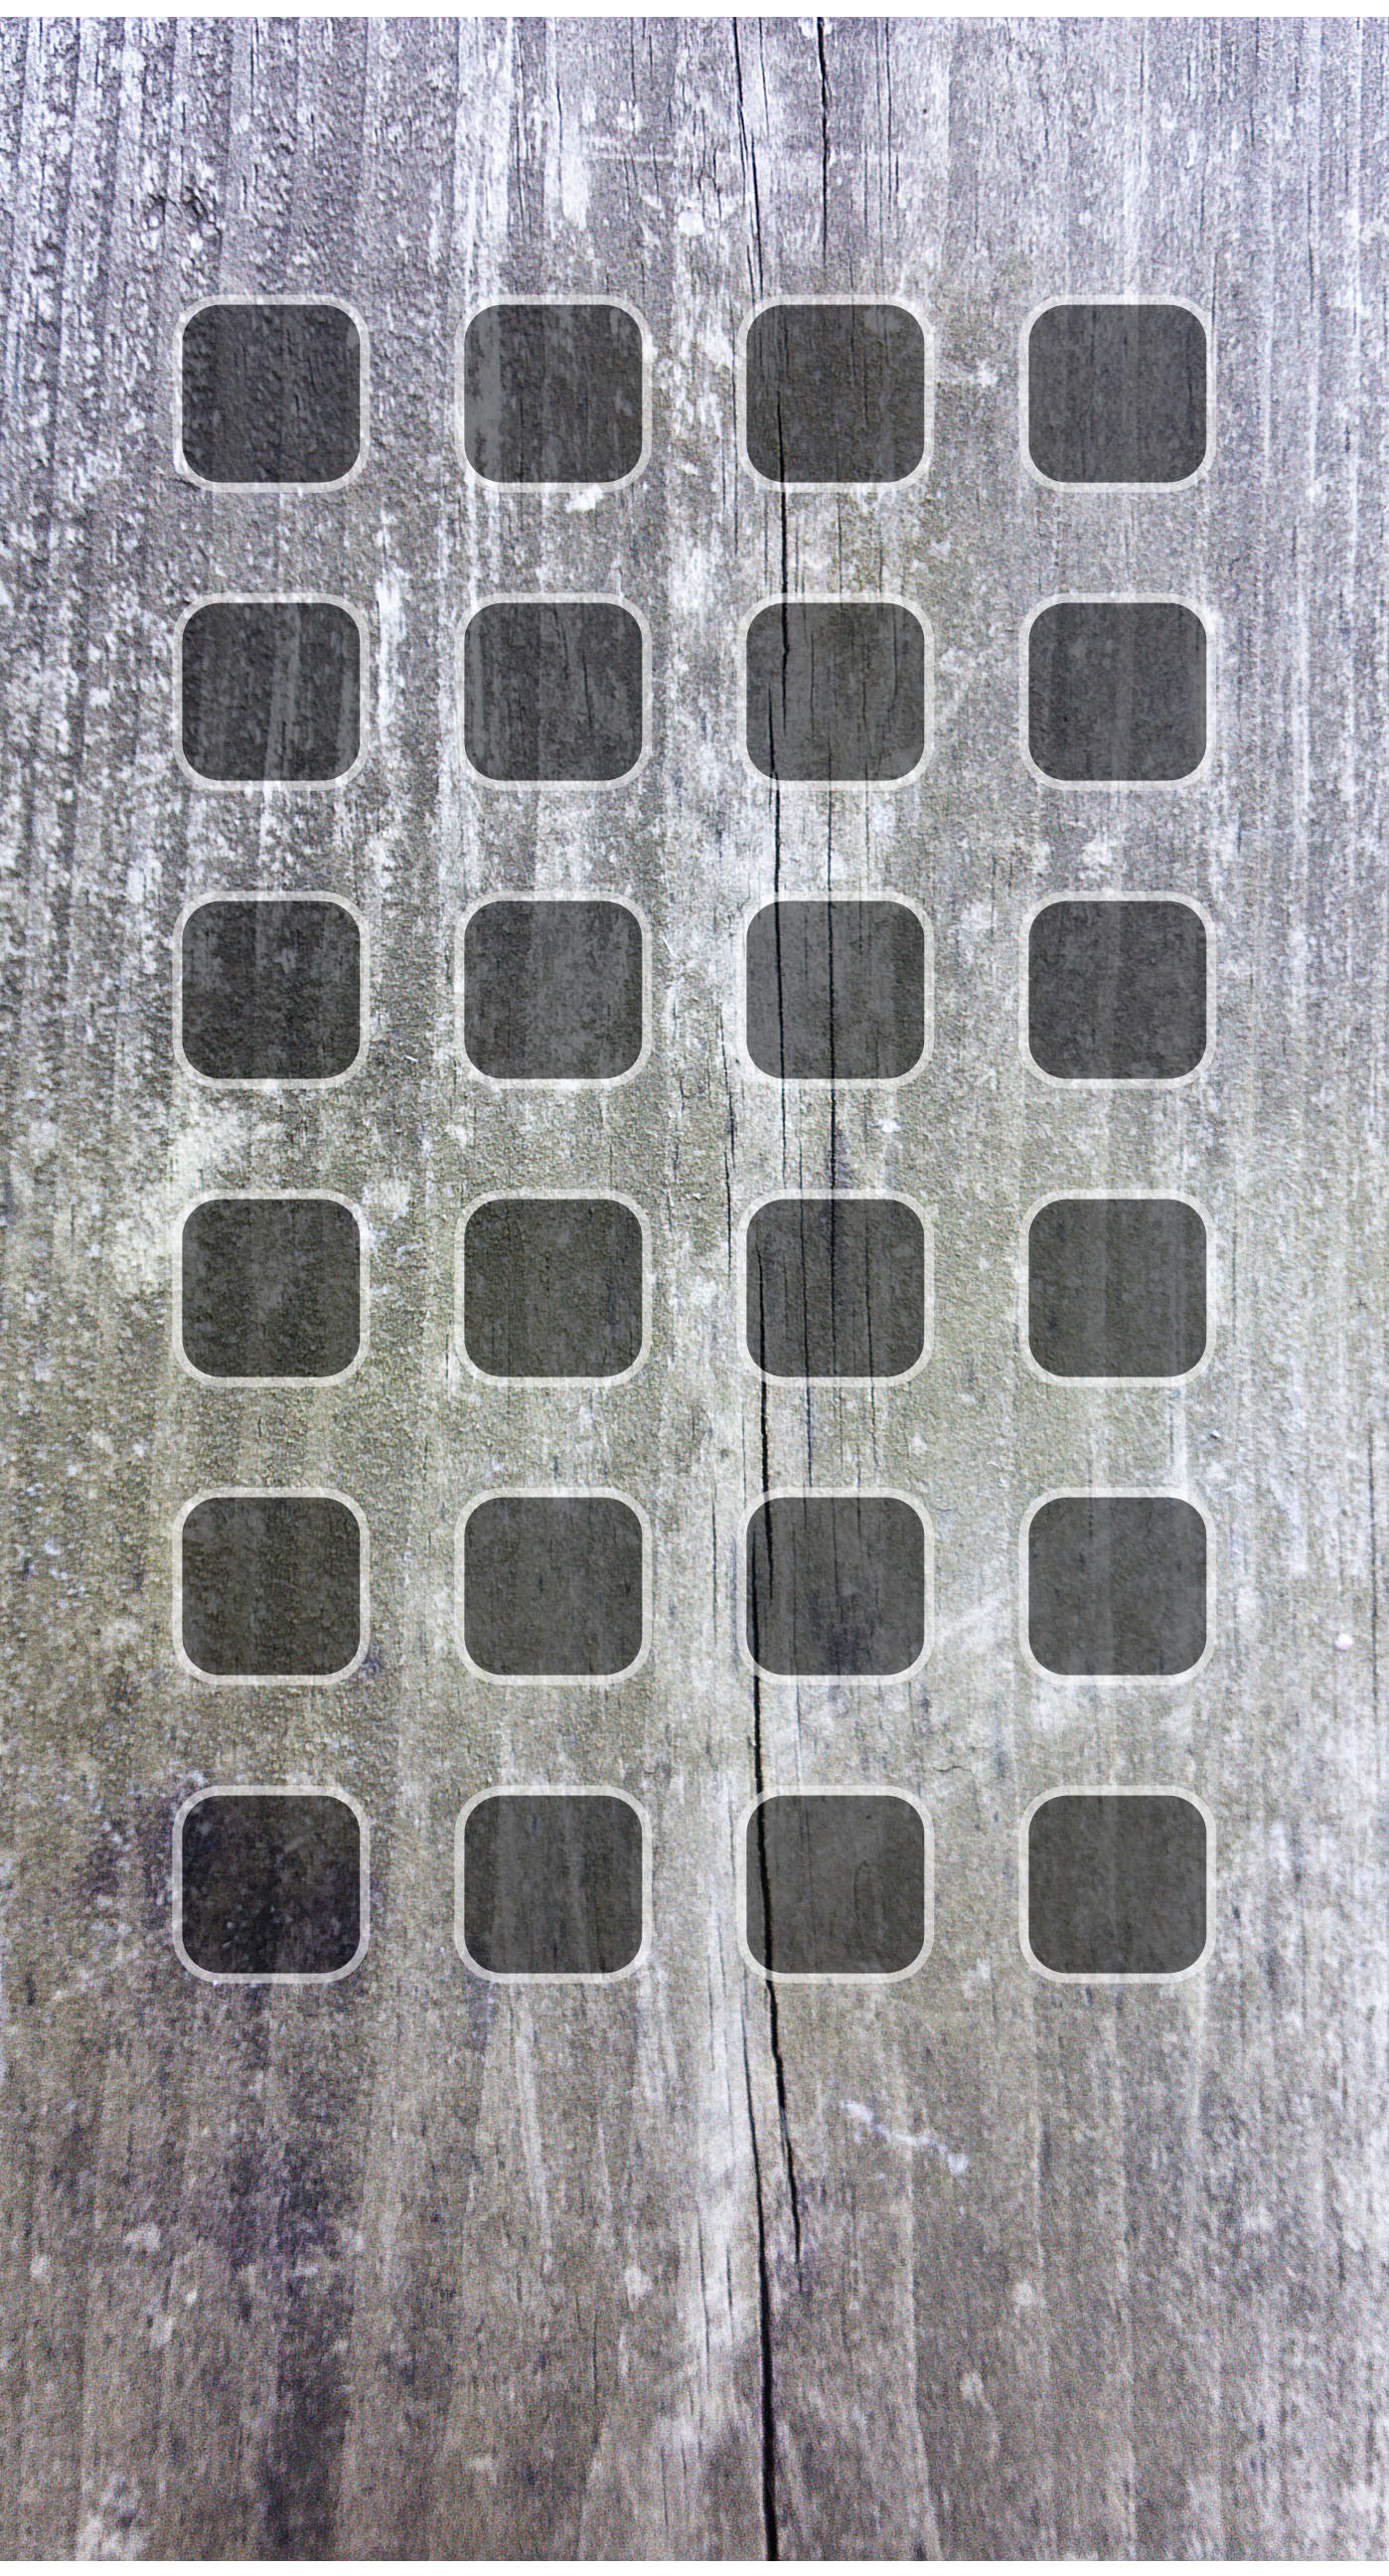 iPhone 6 Plus Wallpaper